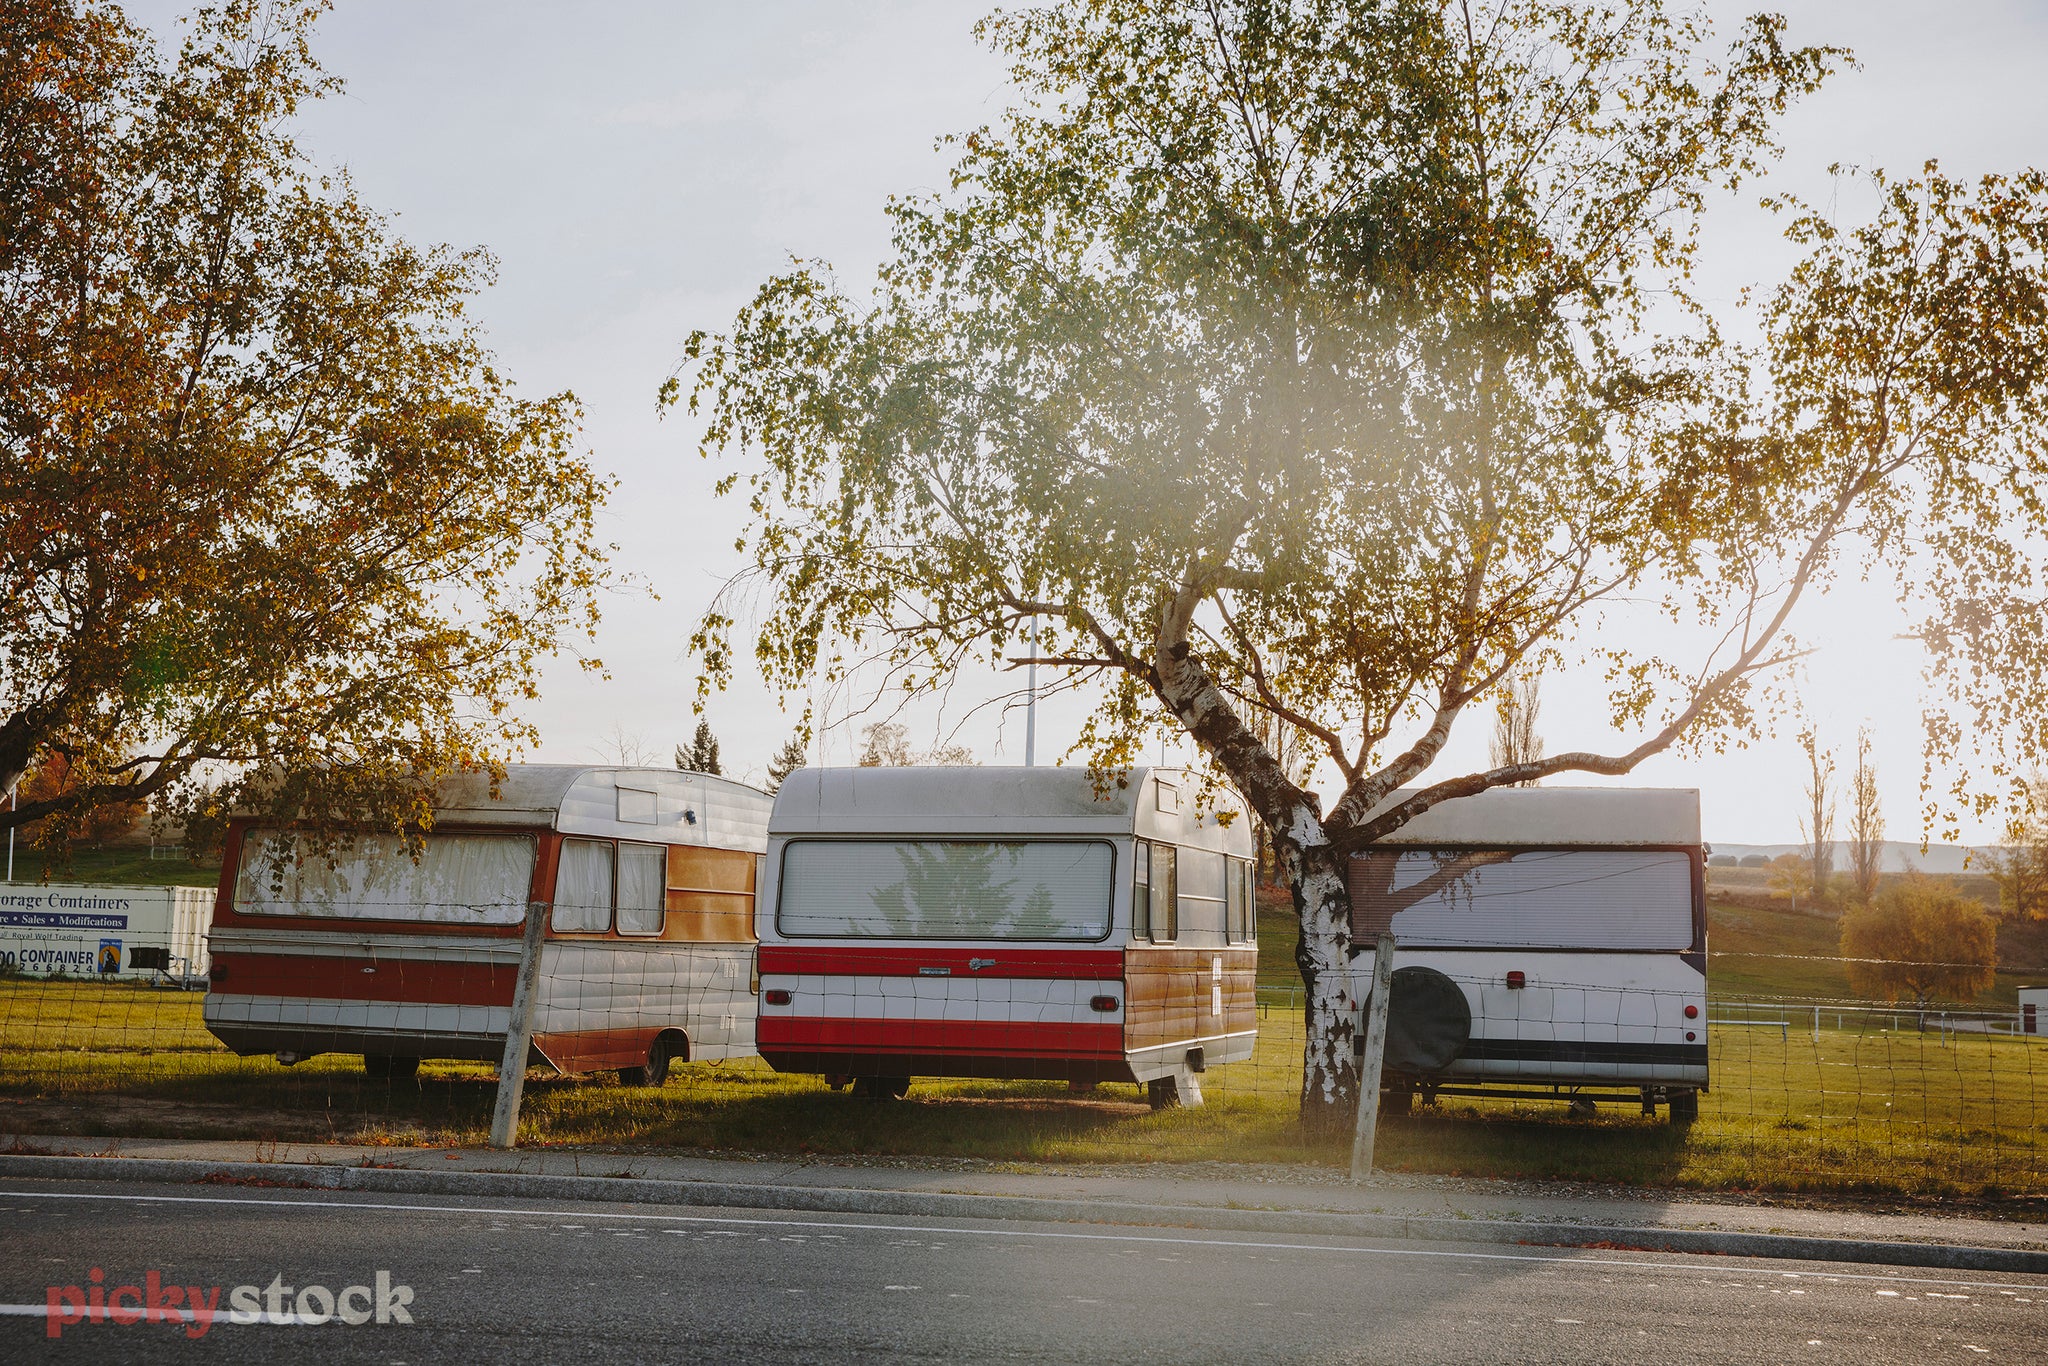 Cinematic image of retro New Zealand caravans lined up along roadside amongst dusky late afternoon sunlight.